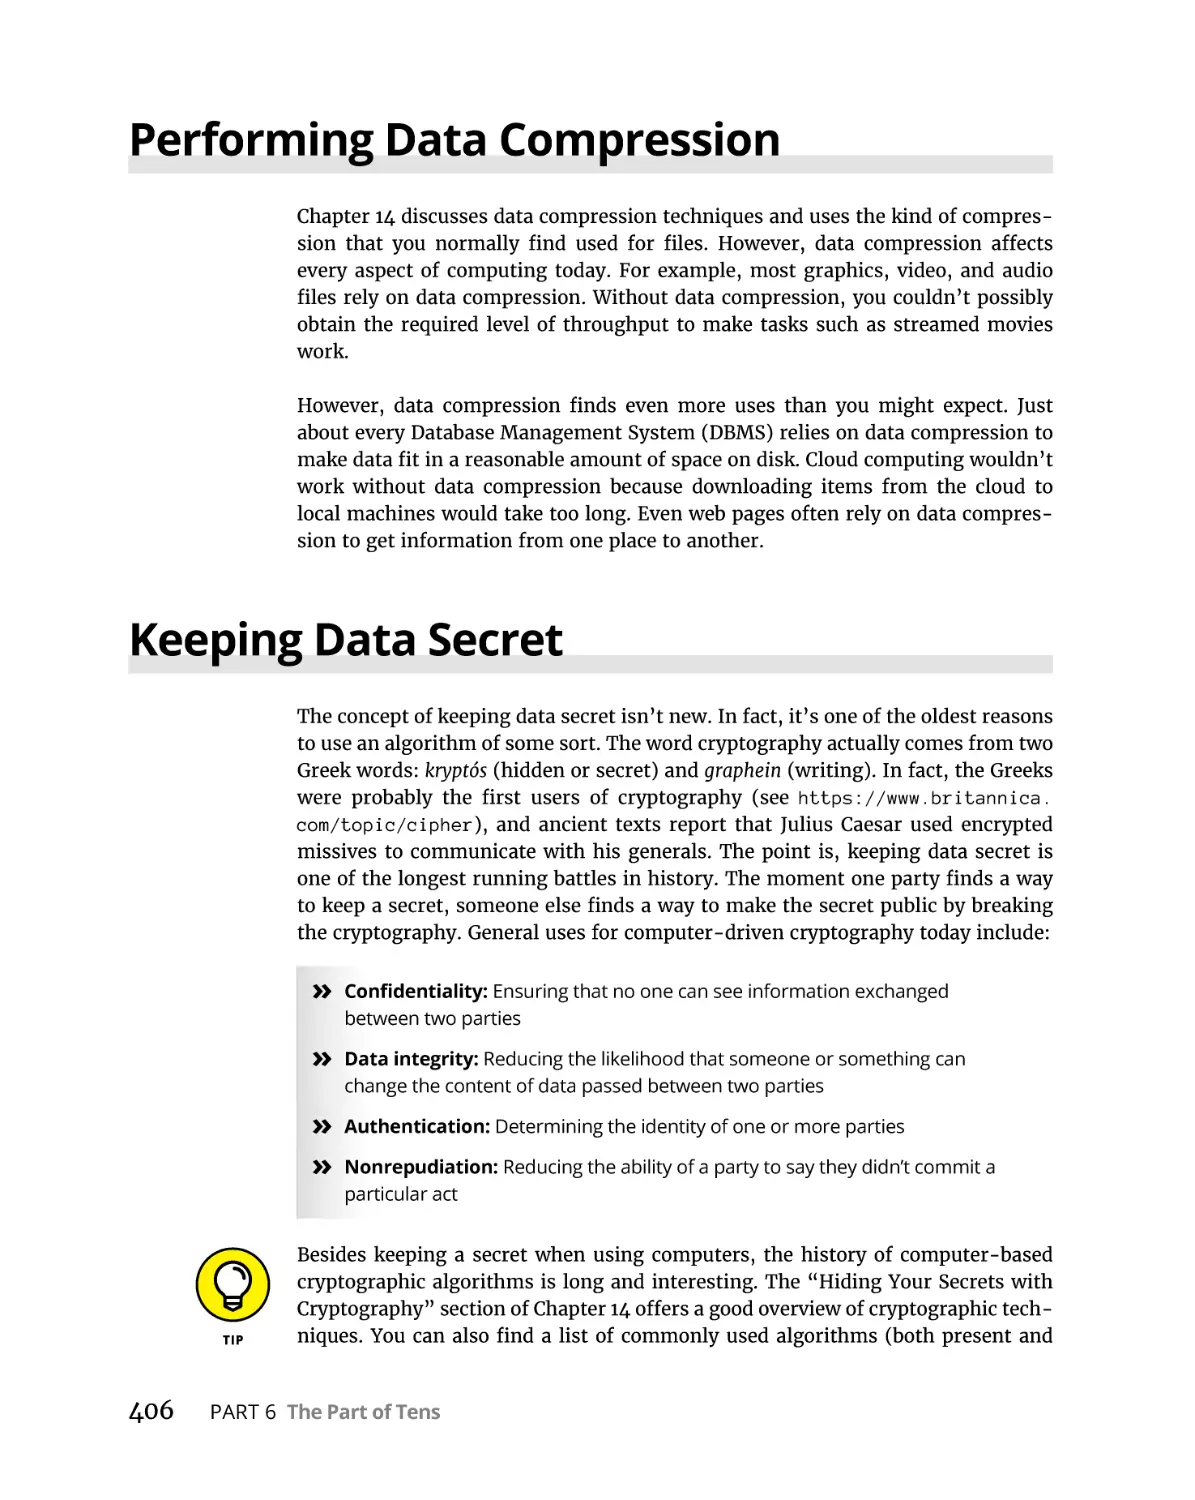 Performing Data Compression
Keeping Data Secret